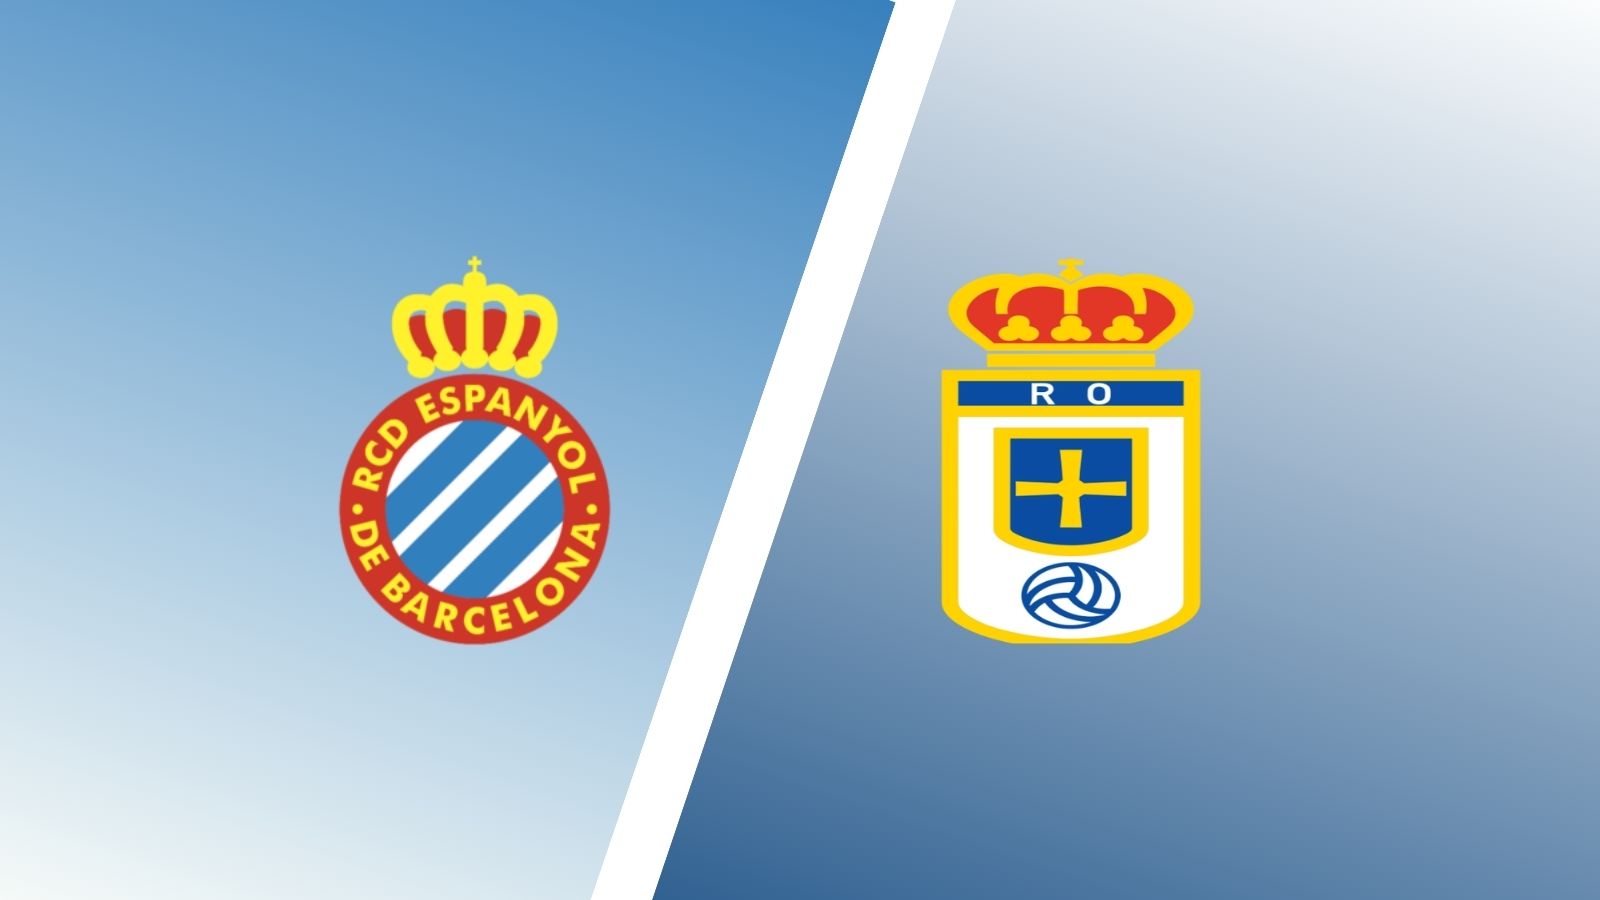 Oviedo vs. rcd espanyol